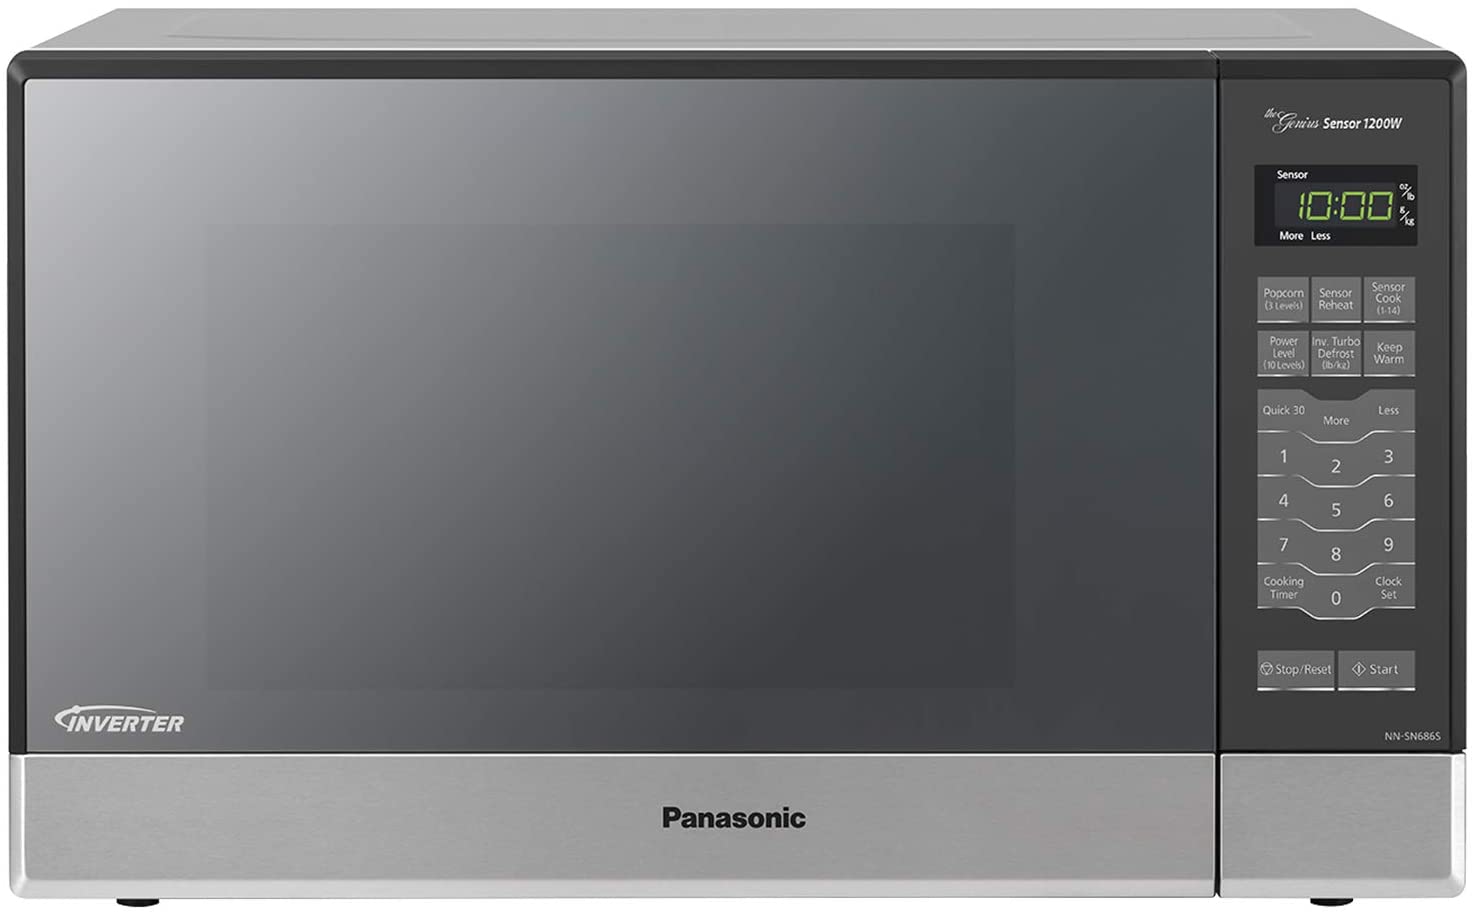 Best Microwave Ovens For Seniors | panospnic